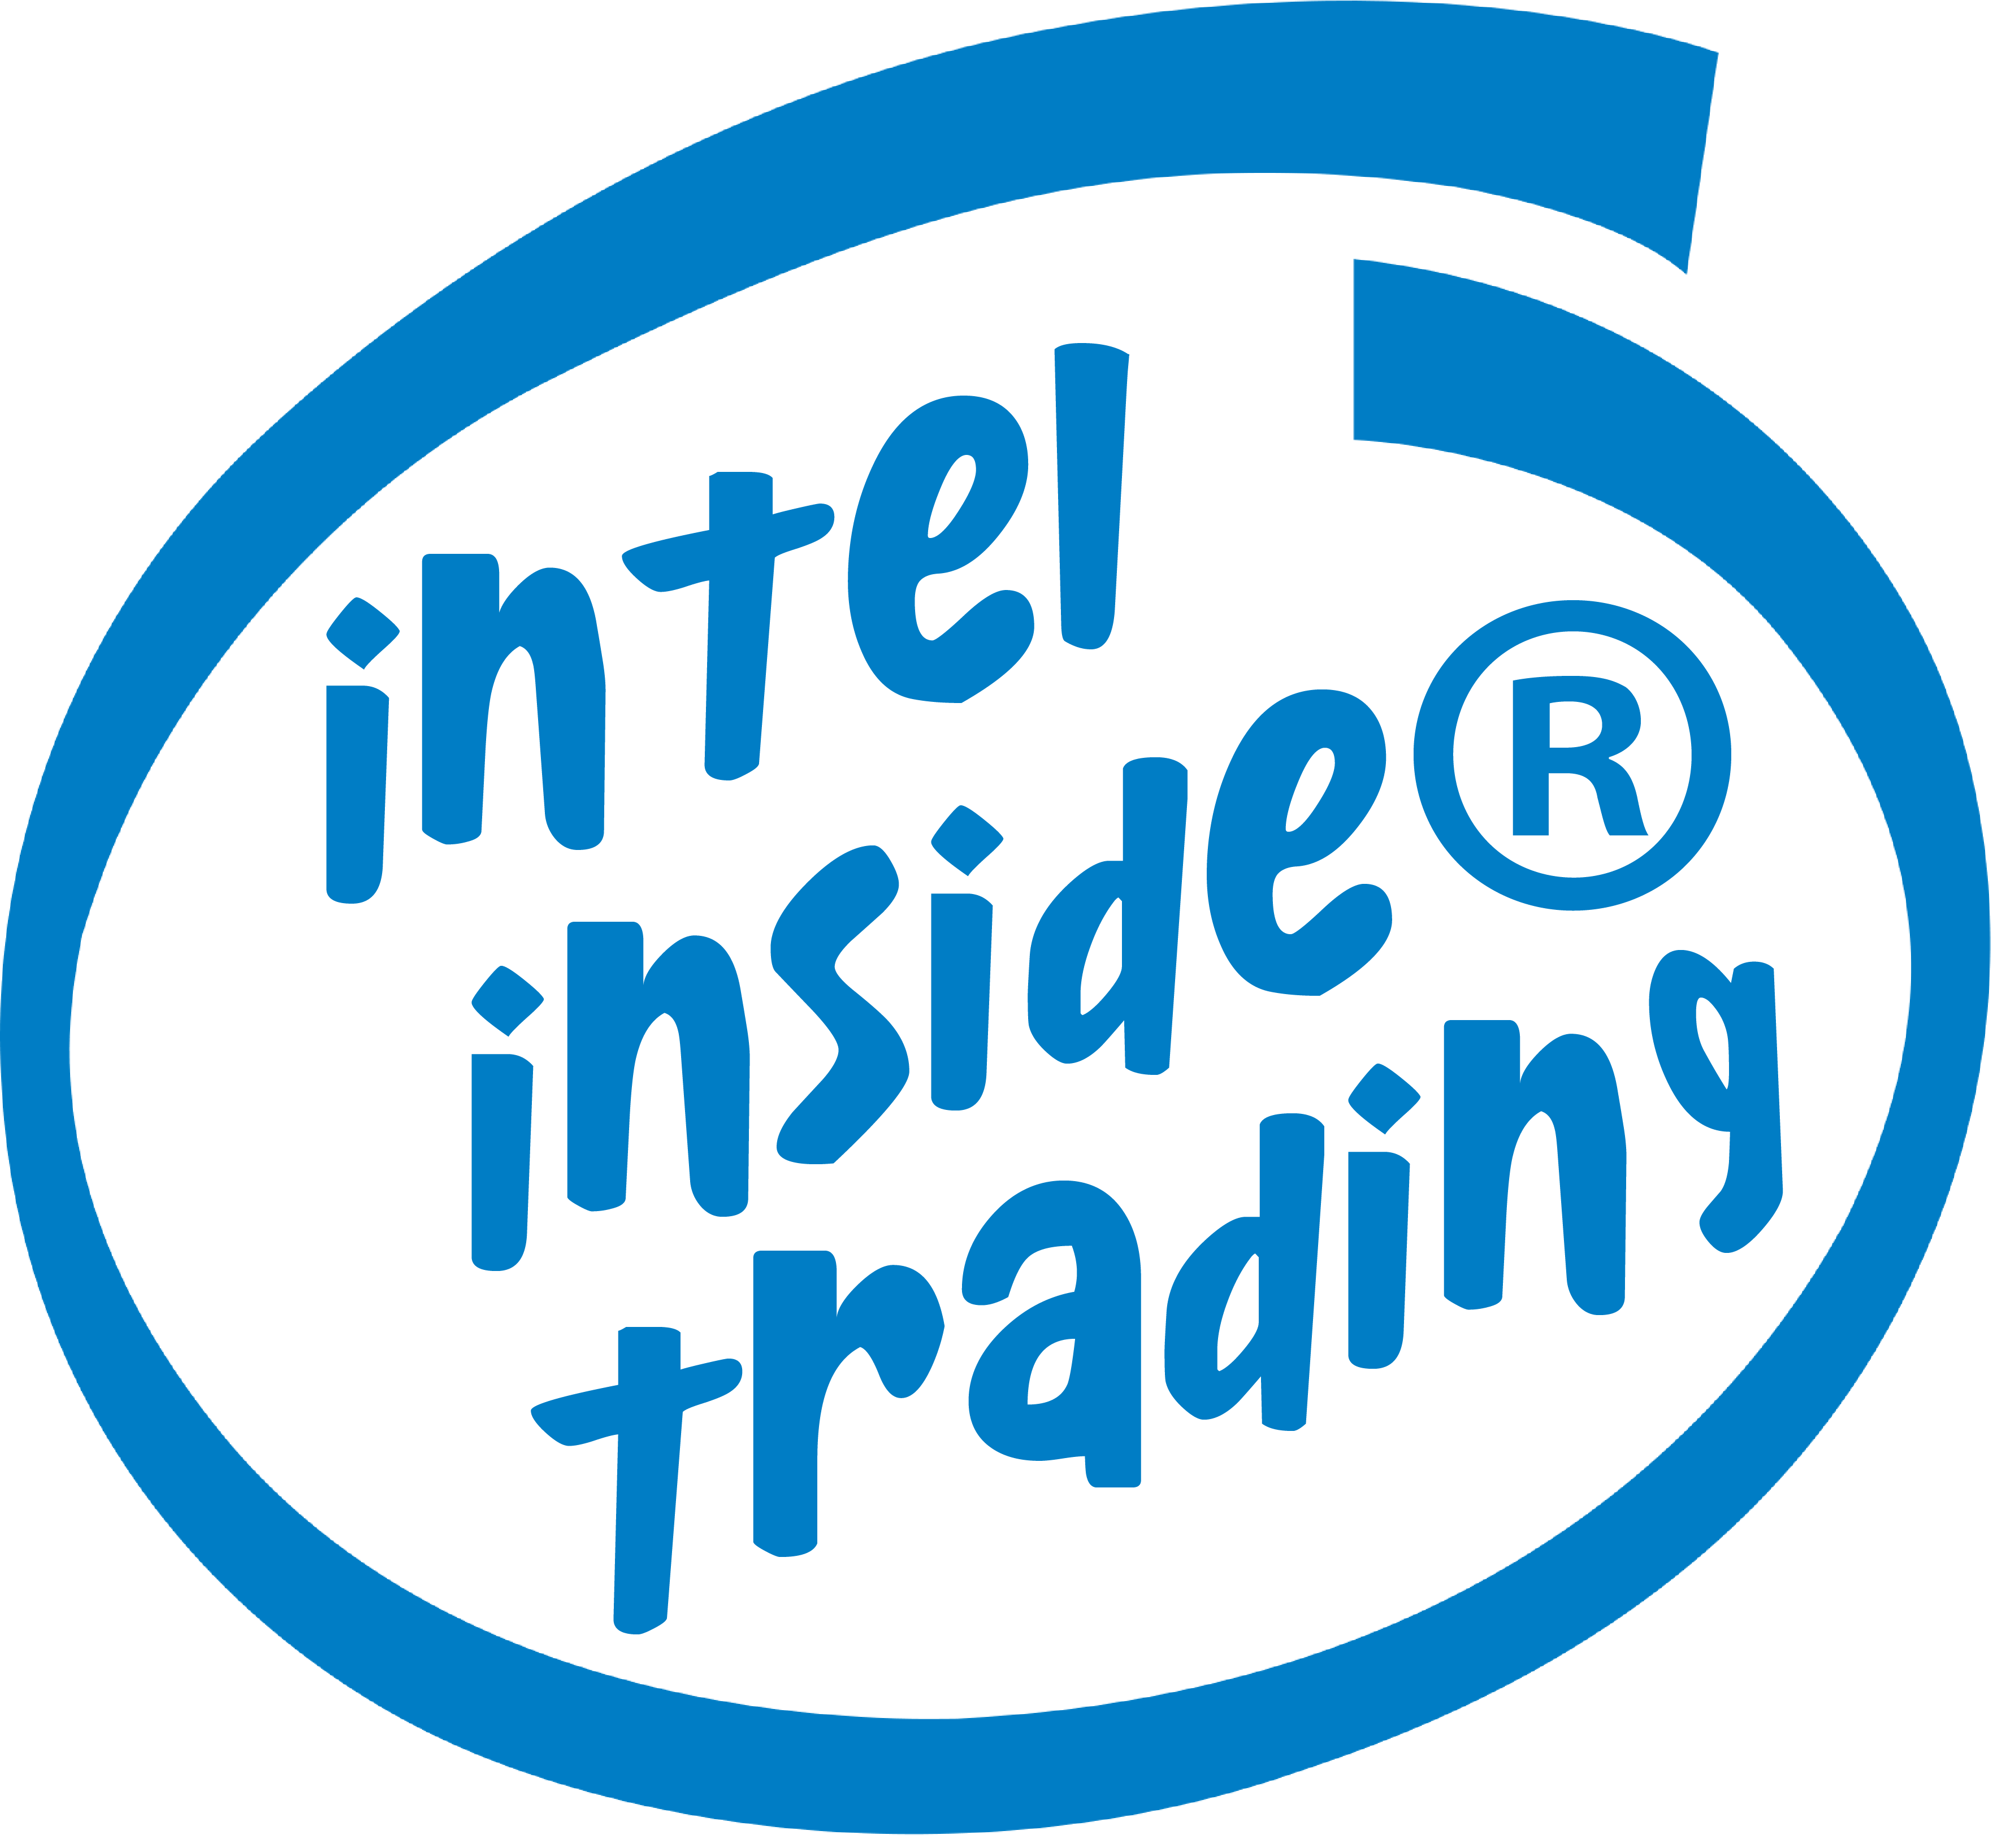 Old Intel Logo - The old Intel logo makes sense now : ProgrammerHumor